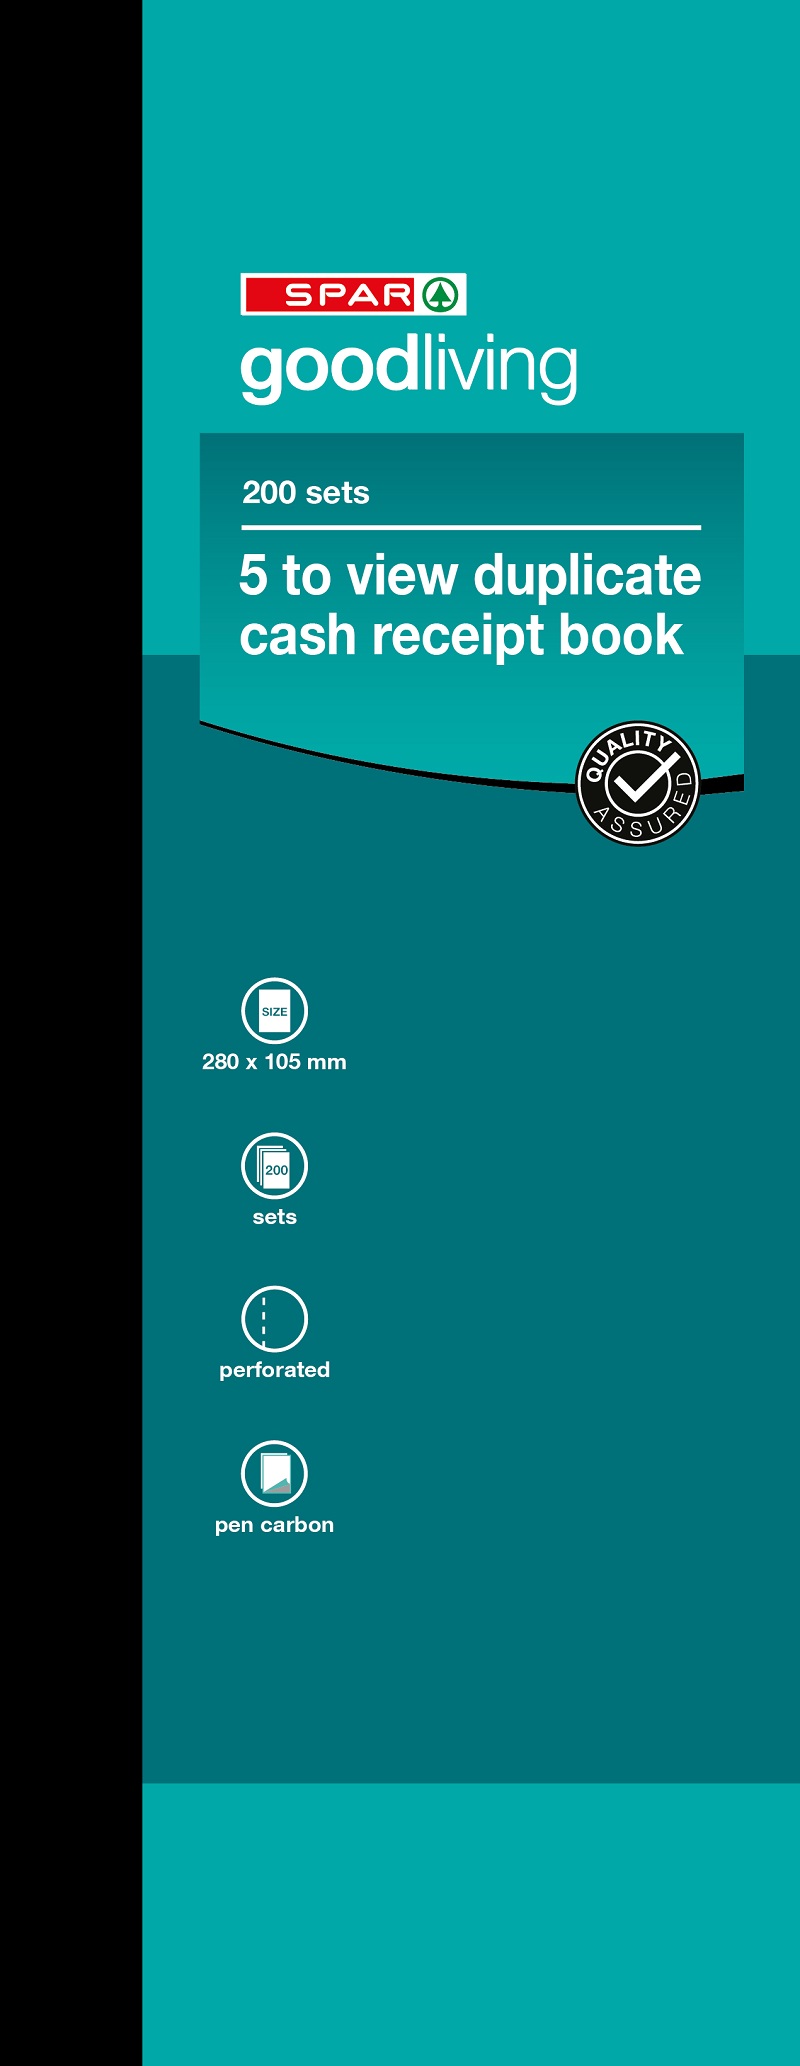 duplicate book 5 to view cash receipt book